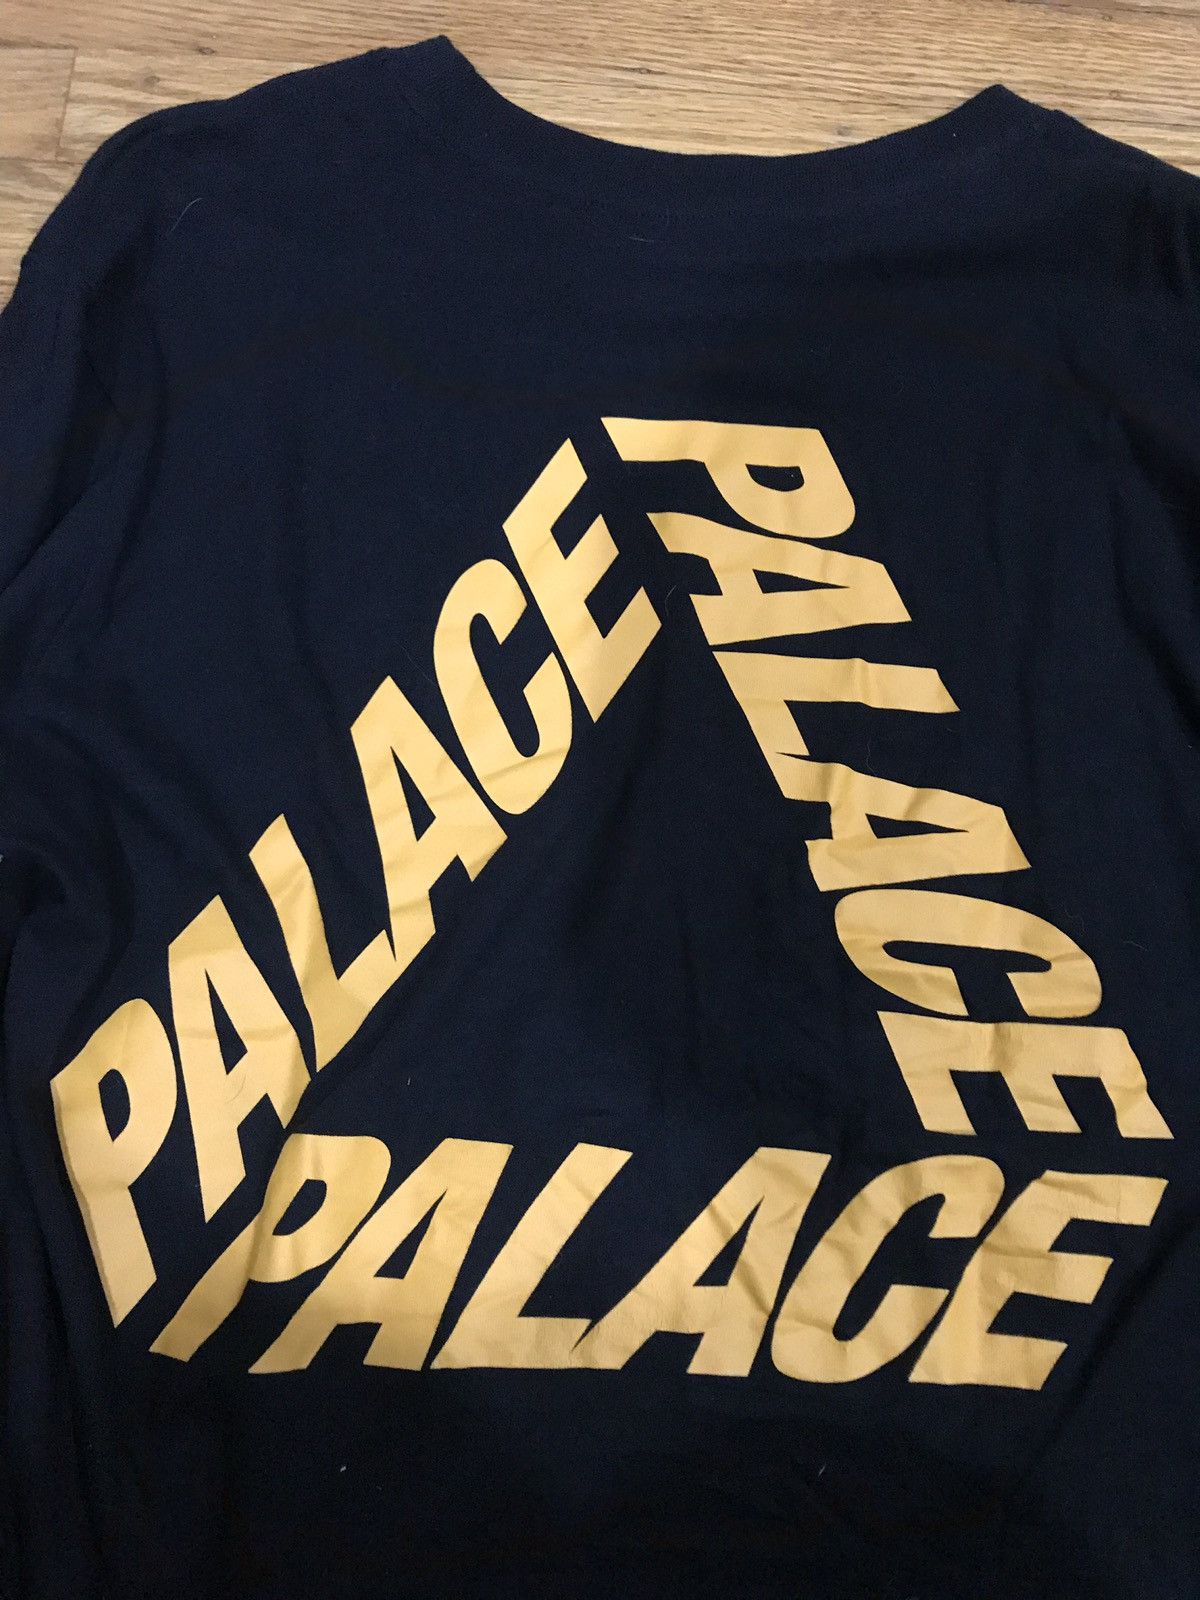 Palace Palace Tri-Ferg Longsleeve T-Shirt Size M Size US M / EU 48-50 / 2 - 5 Preview